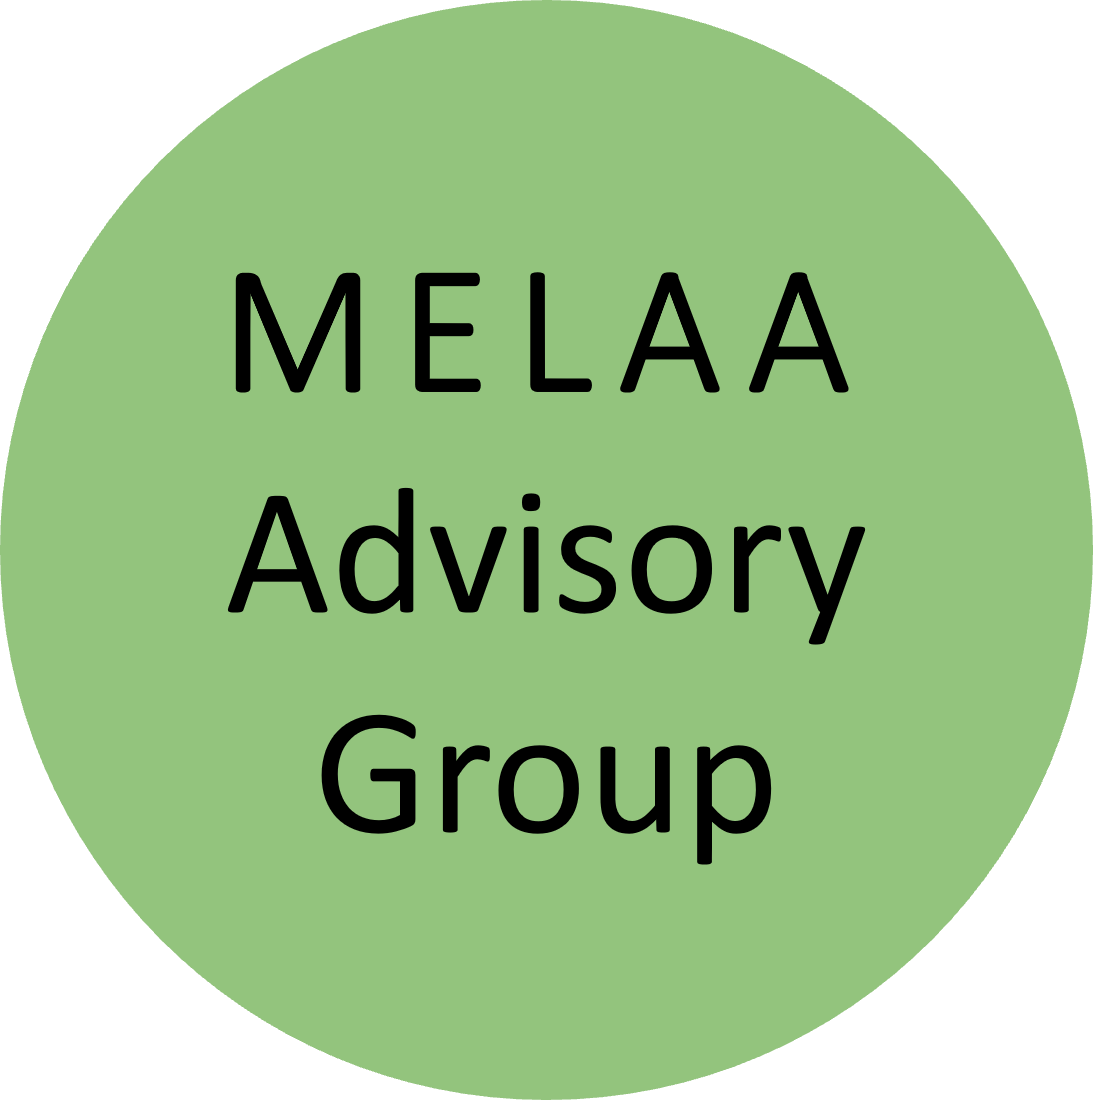 MELAA Advisory Group New Zealand